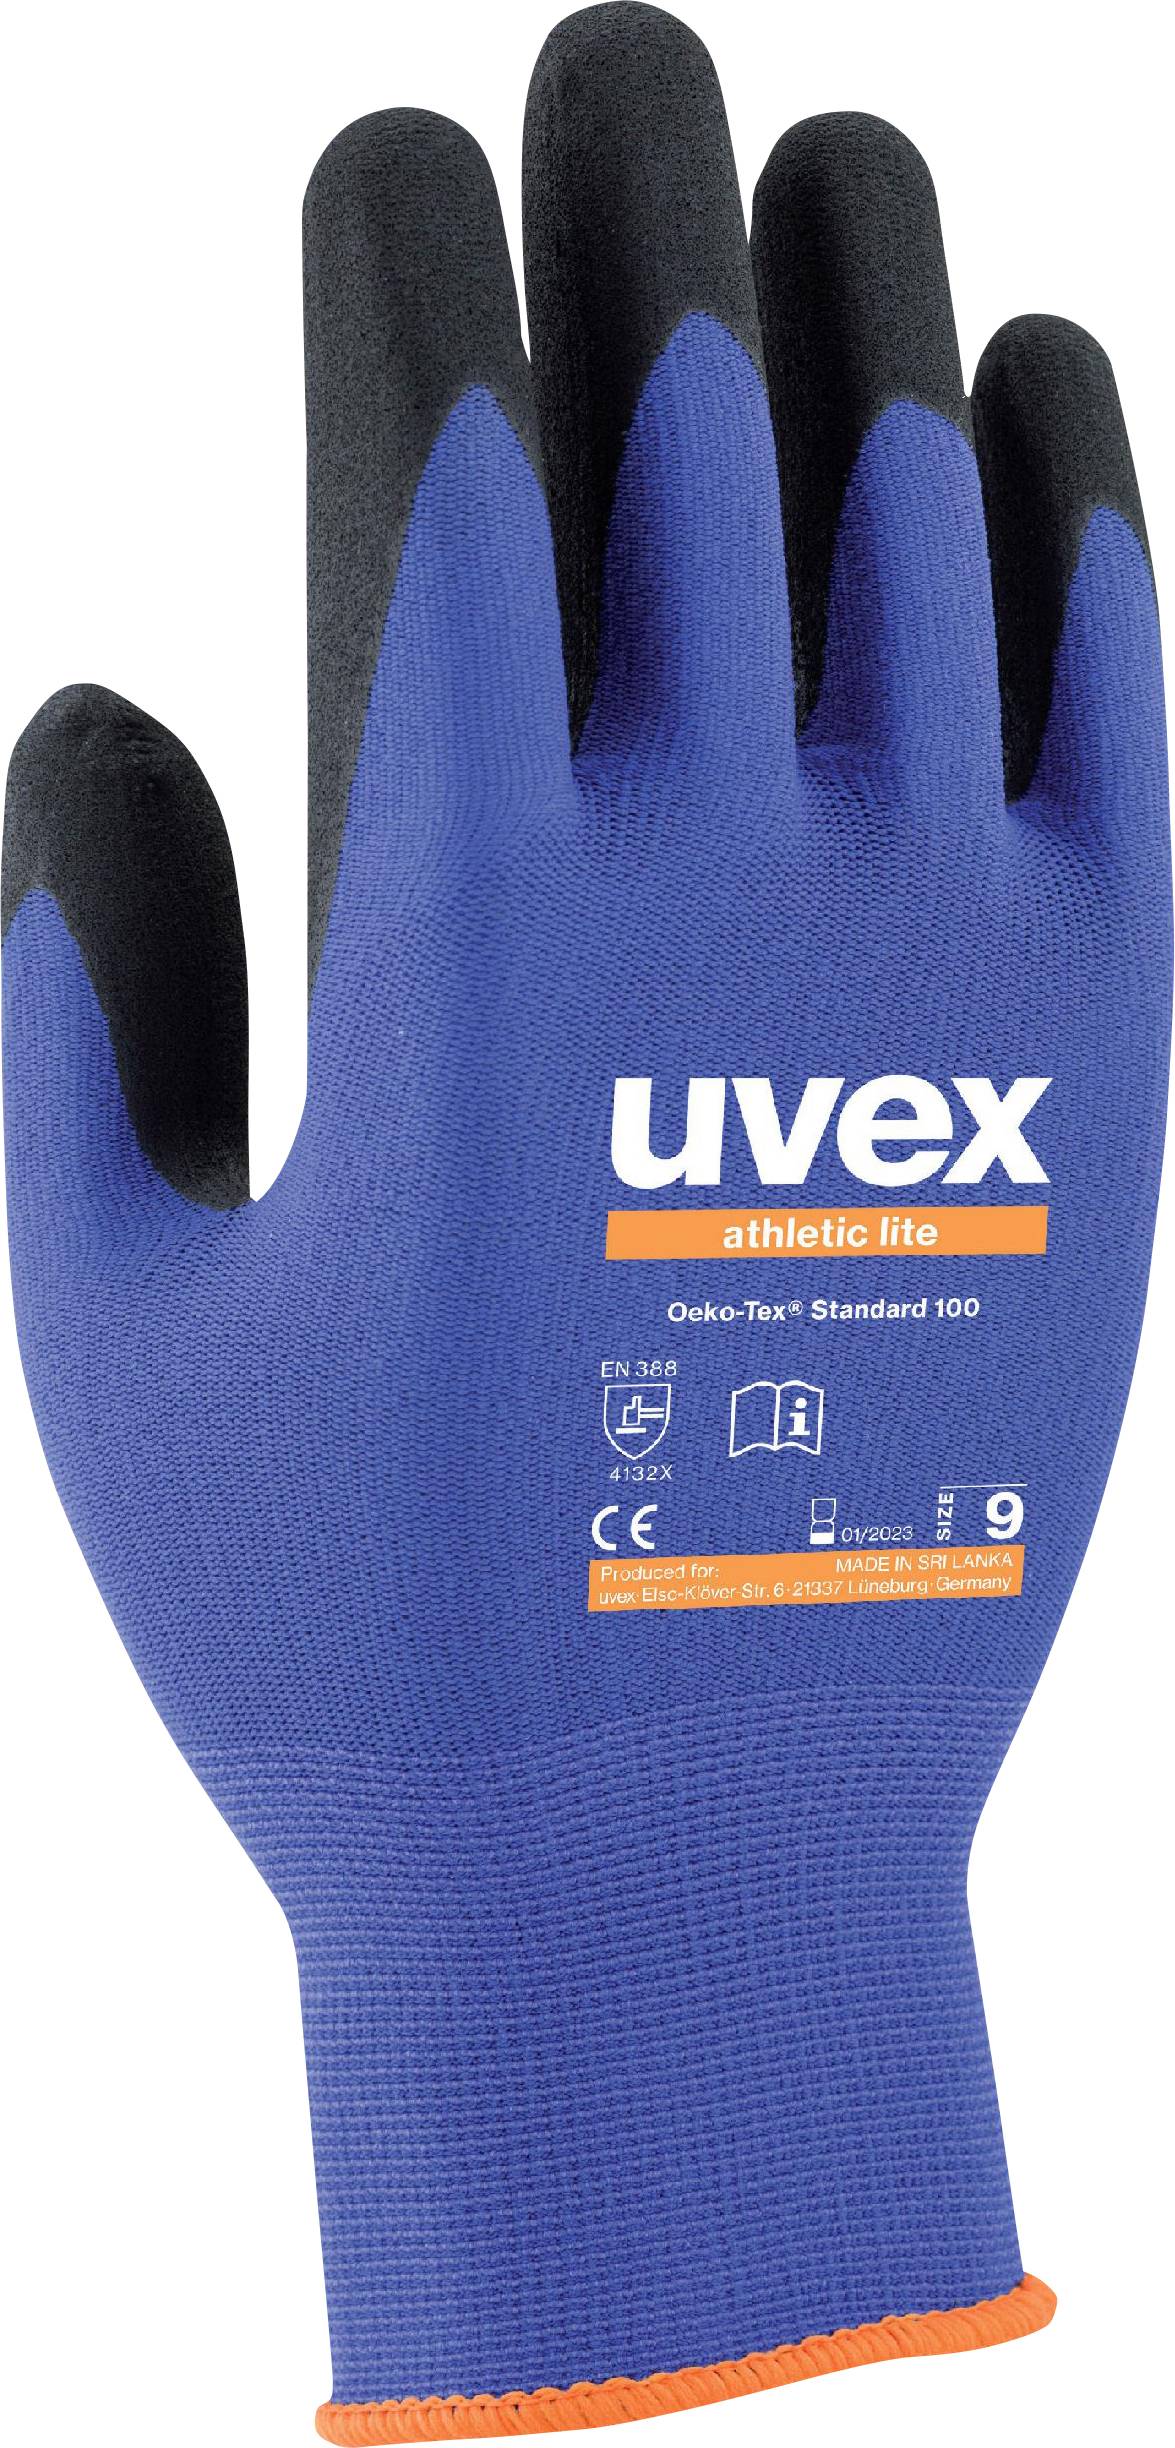 UVEX 6038 6002707 Montagehandschuh Größe (Handschuhe): 7 EN 388:2016 1 Stück (6002707)